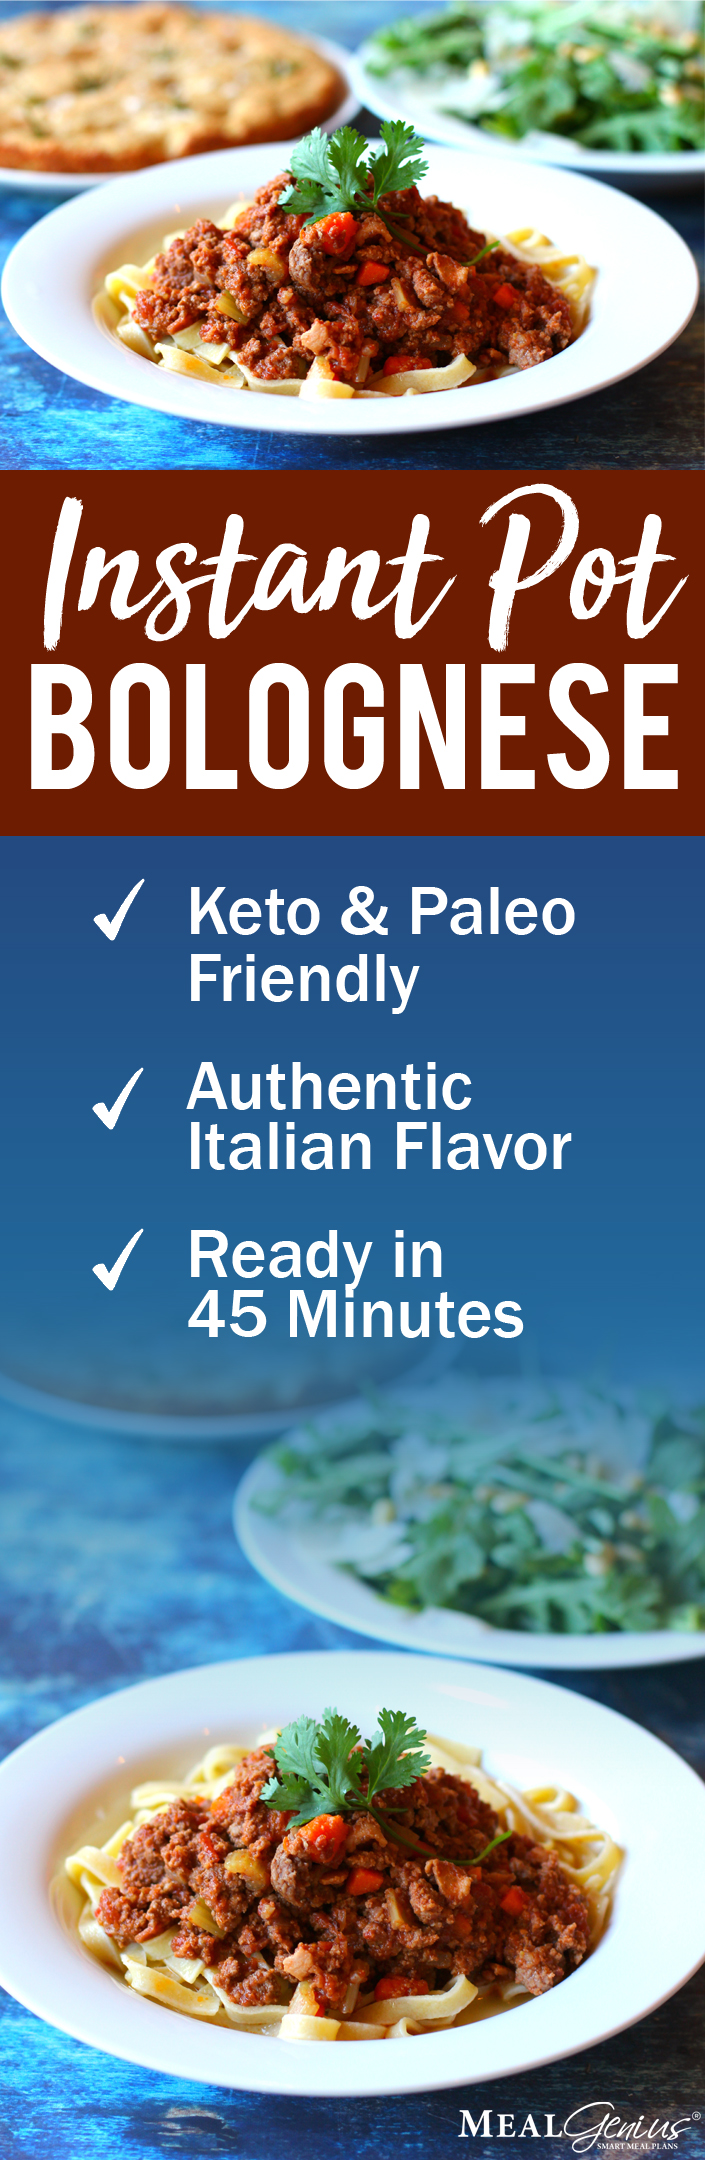 Instant Pot Bolognese - Meal Genius